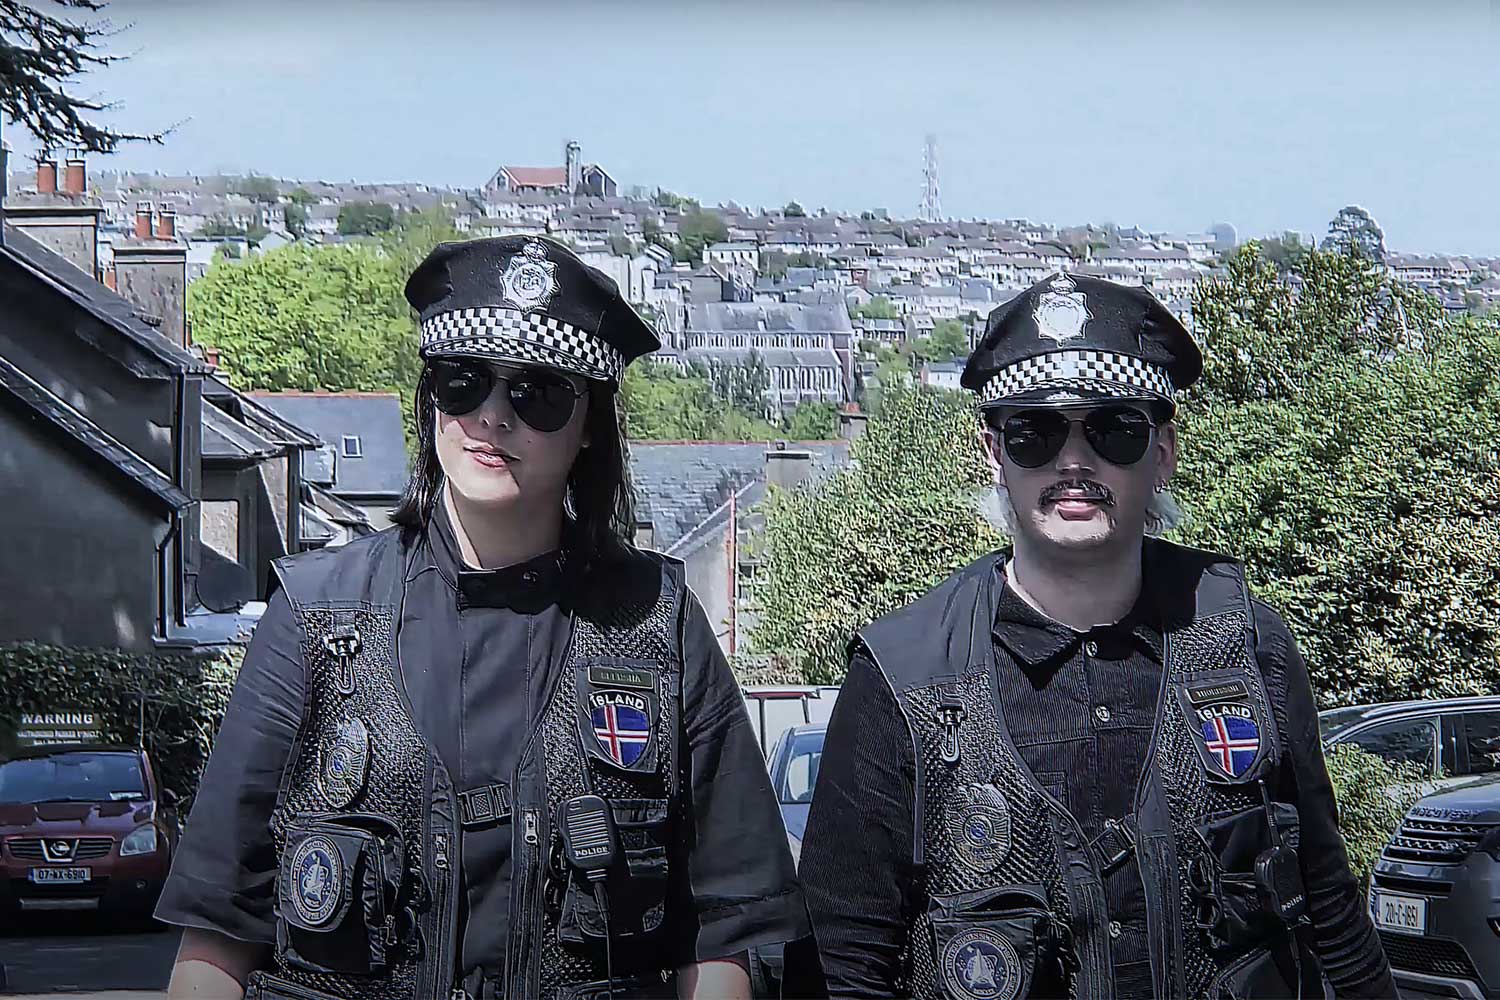 Seersha and Thorisson wear police uniforms in Cork, Ireland